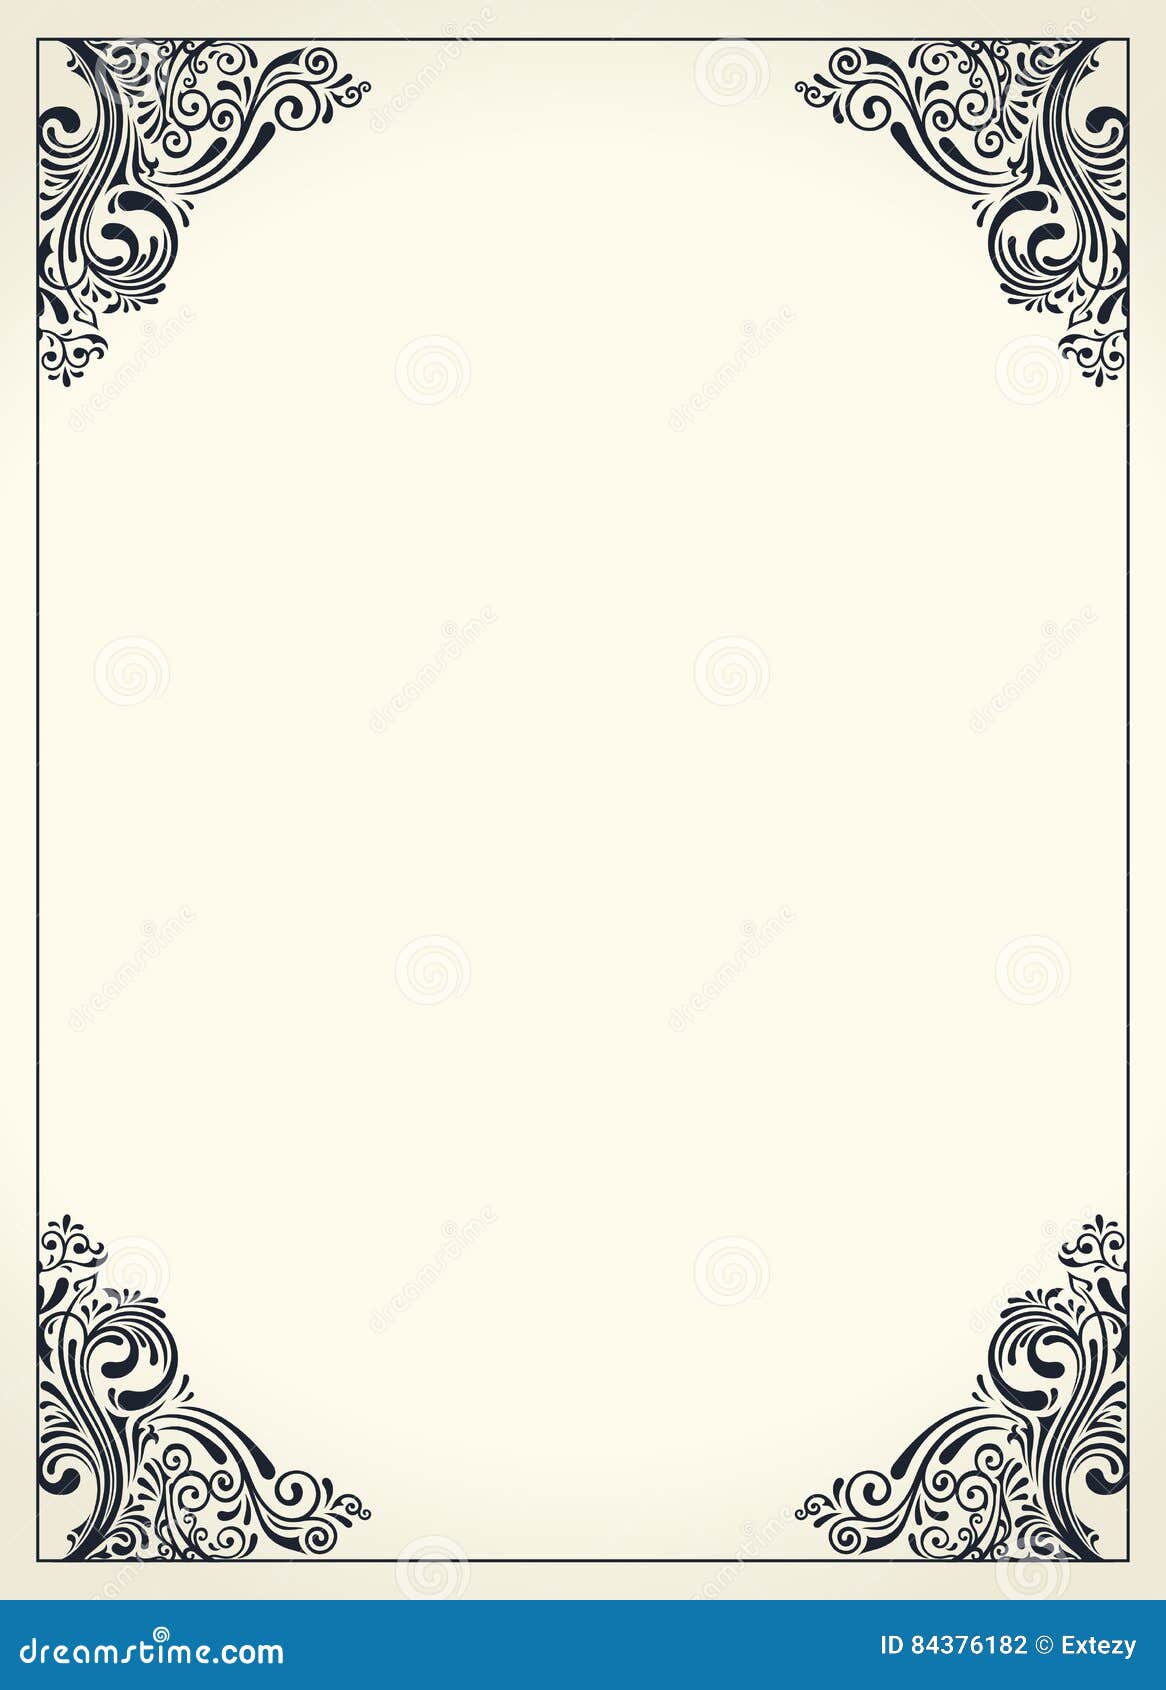 Calligraphic Border Frame. Design Template for Wedding Greeting ...